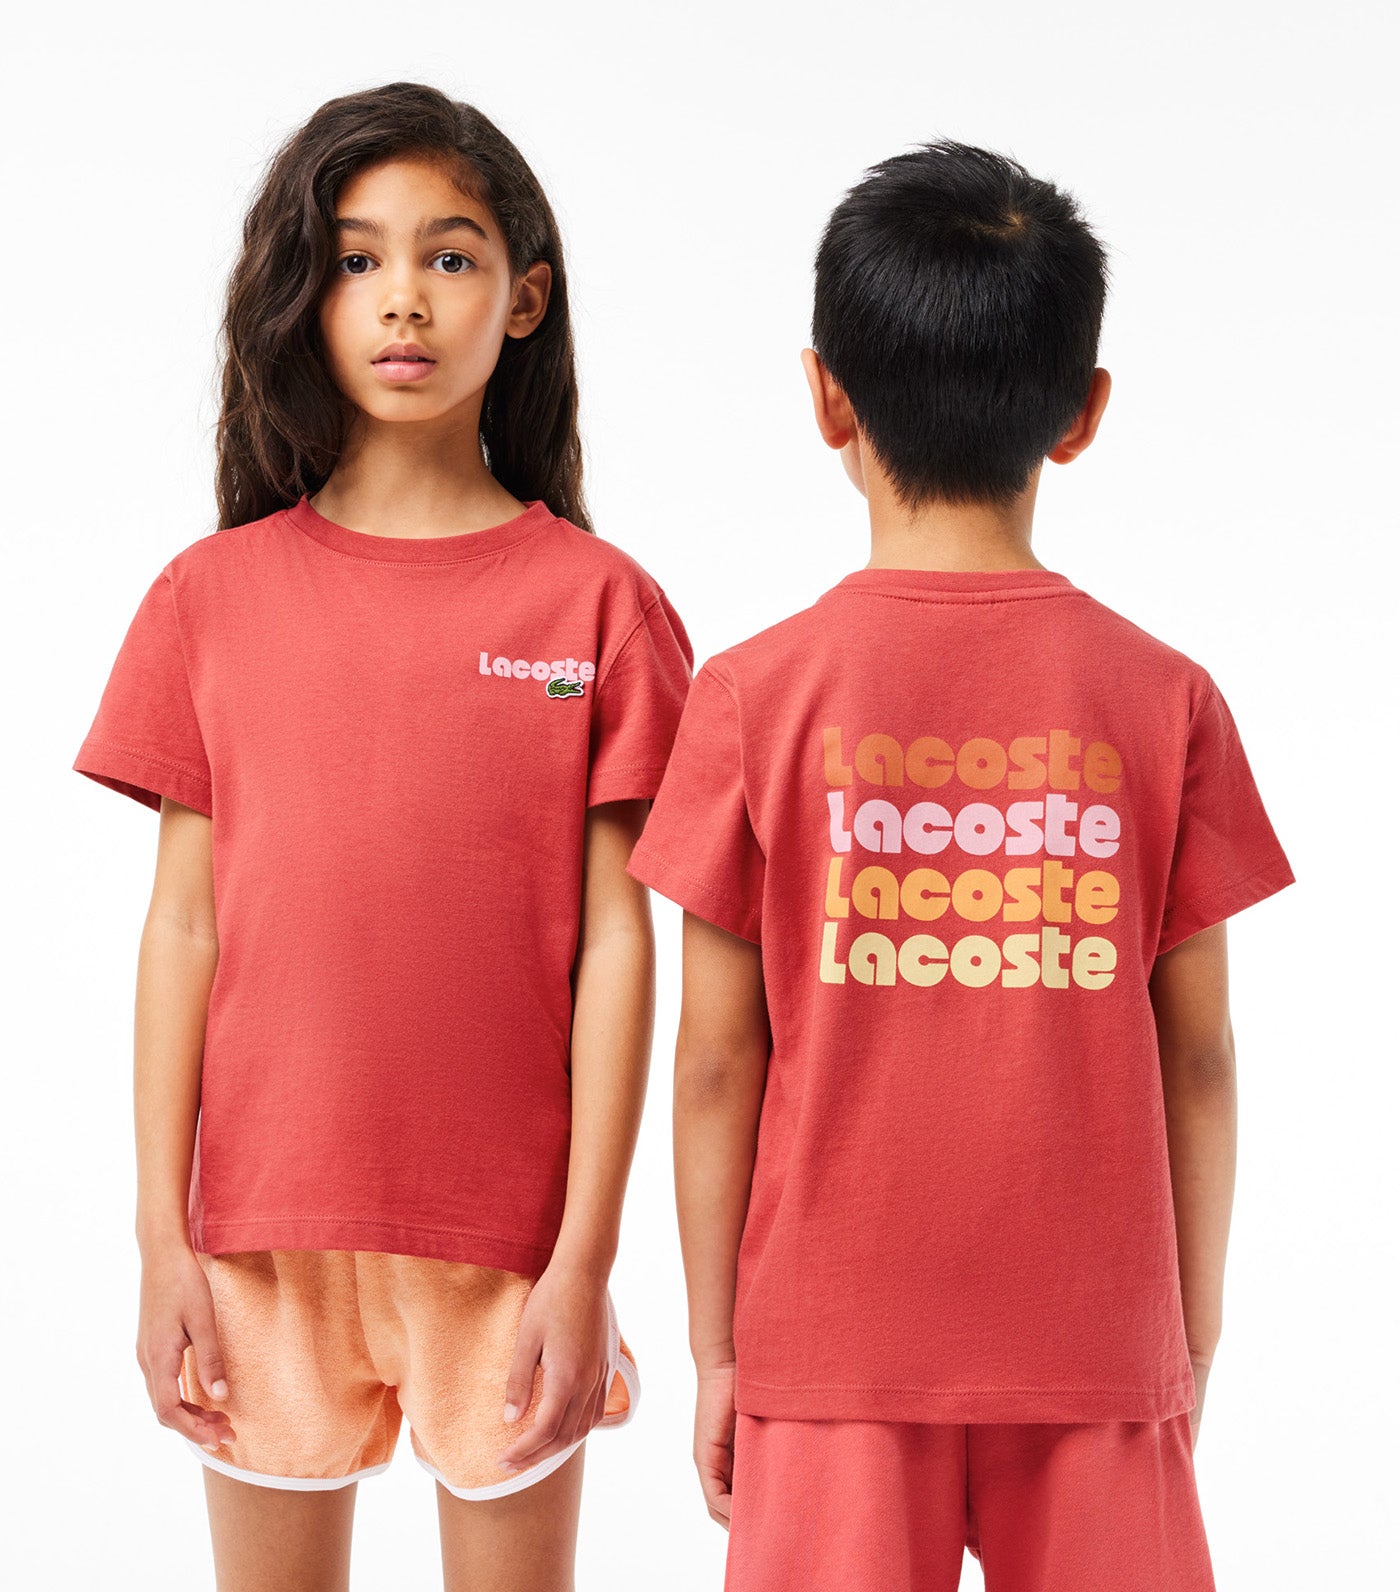 Kids' Contrast Print Cotton Jersey T-shirt Sierra Red